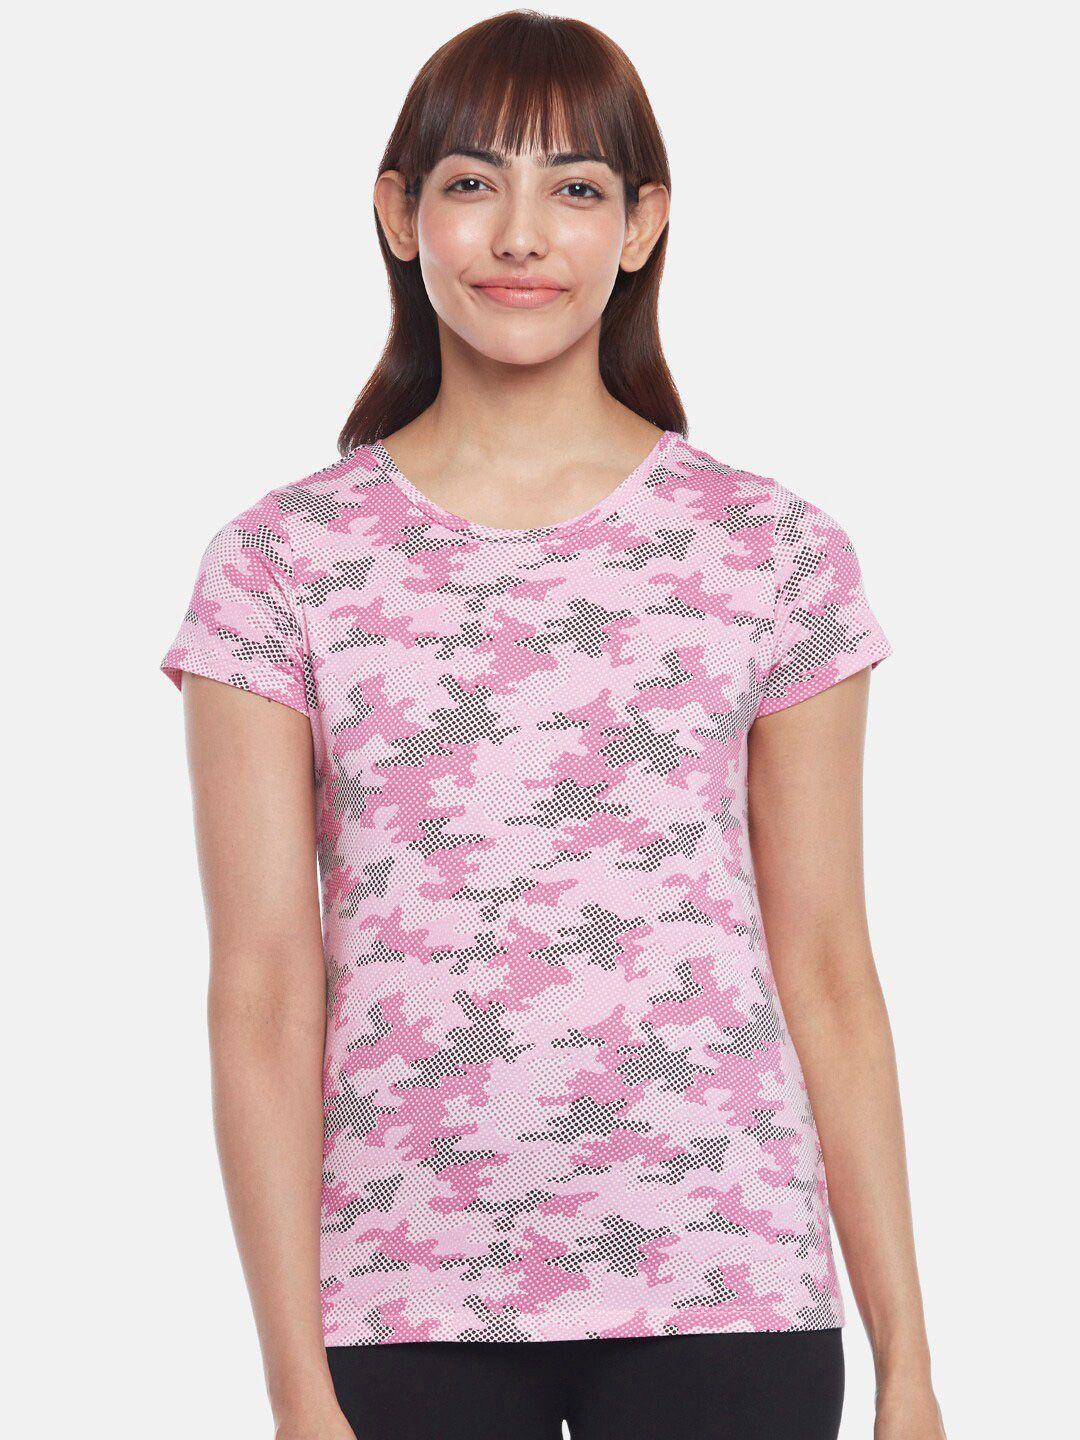 ajile by pantaloons women pink camouflage printed t-shirt